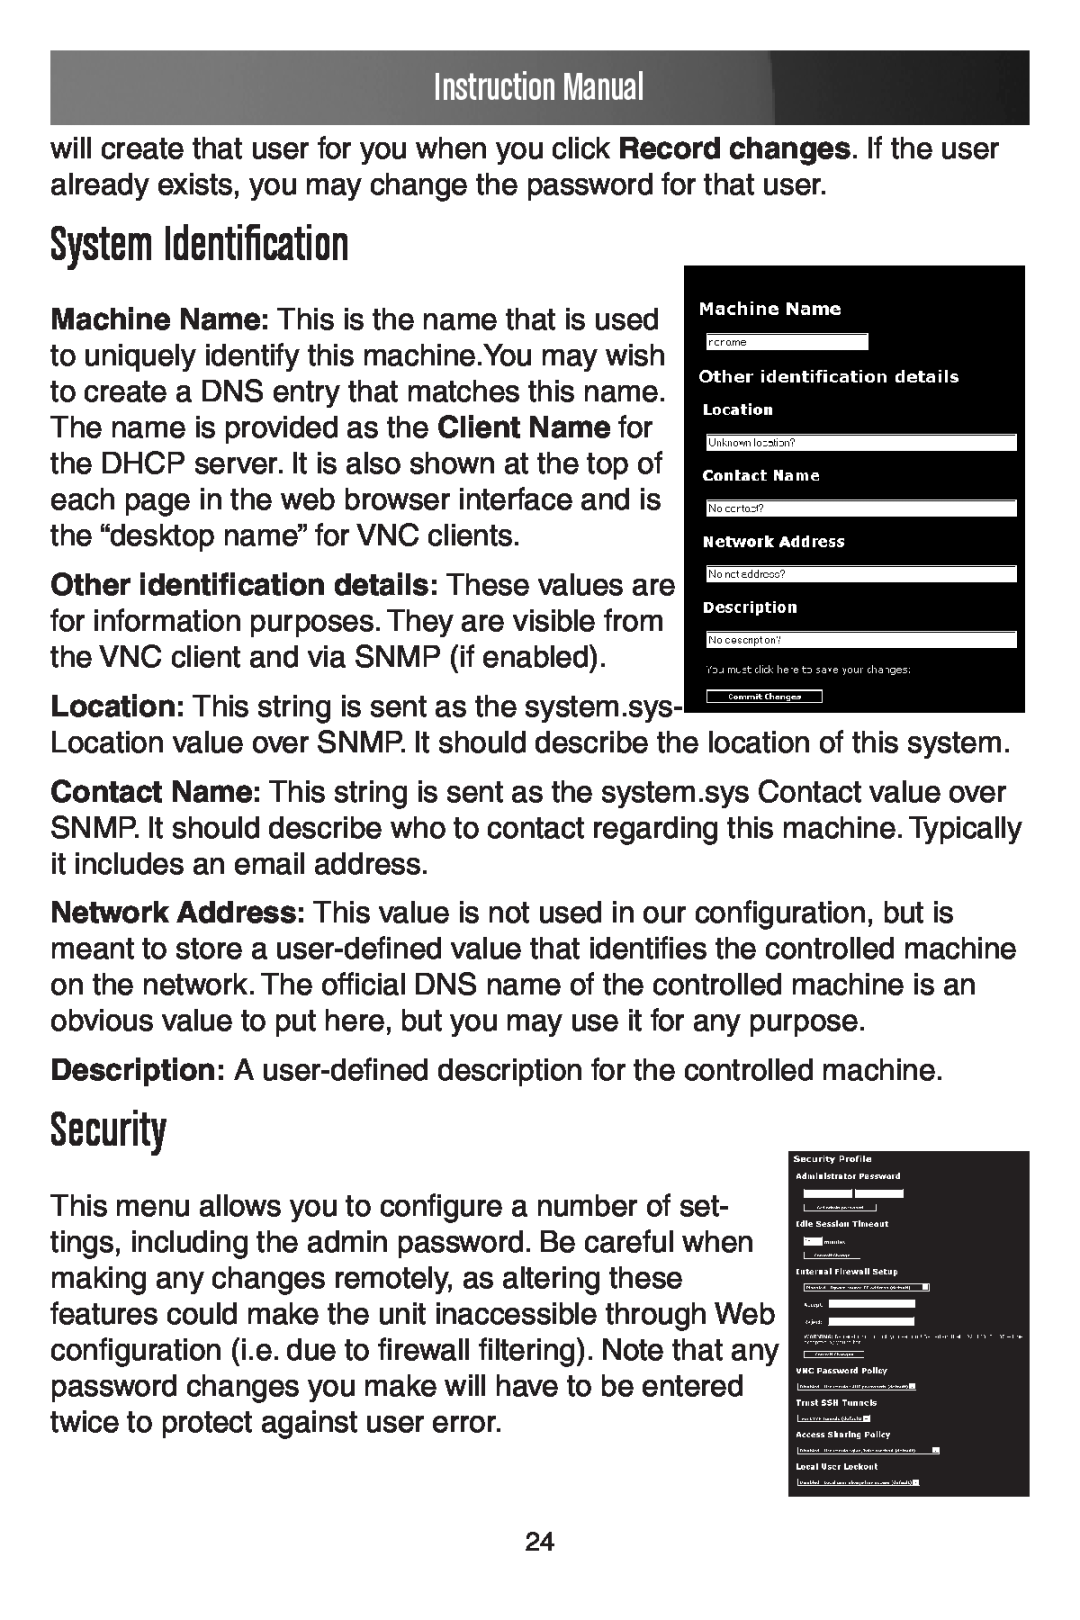 StarTech.com SV441DUSBI instruction manual System Identification, Security 